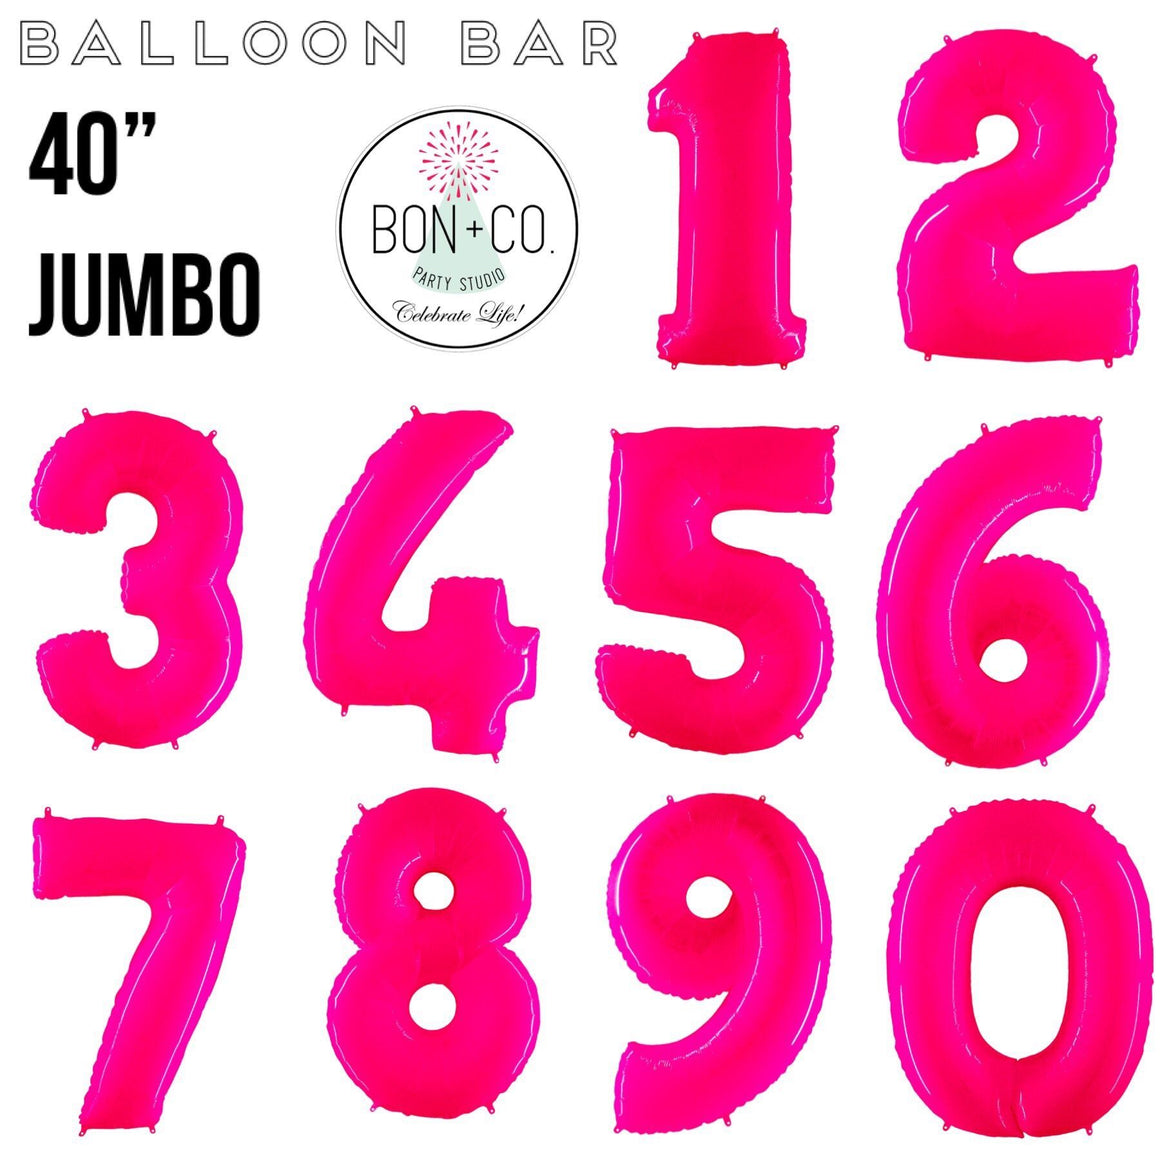 BALLOON BAR - 40" JUMBO NUMBER BRIGHT PINK, Balloons, bargain balloons - Bon + Co. Party Studio